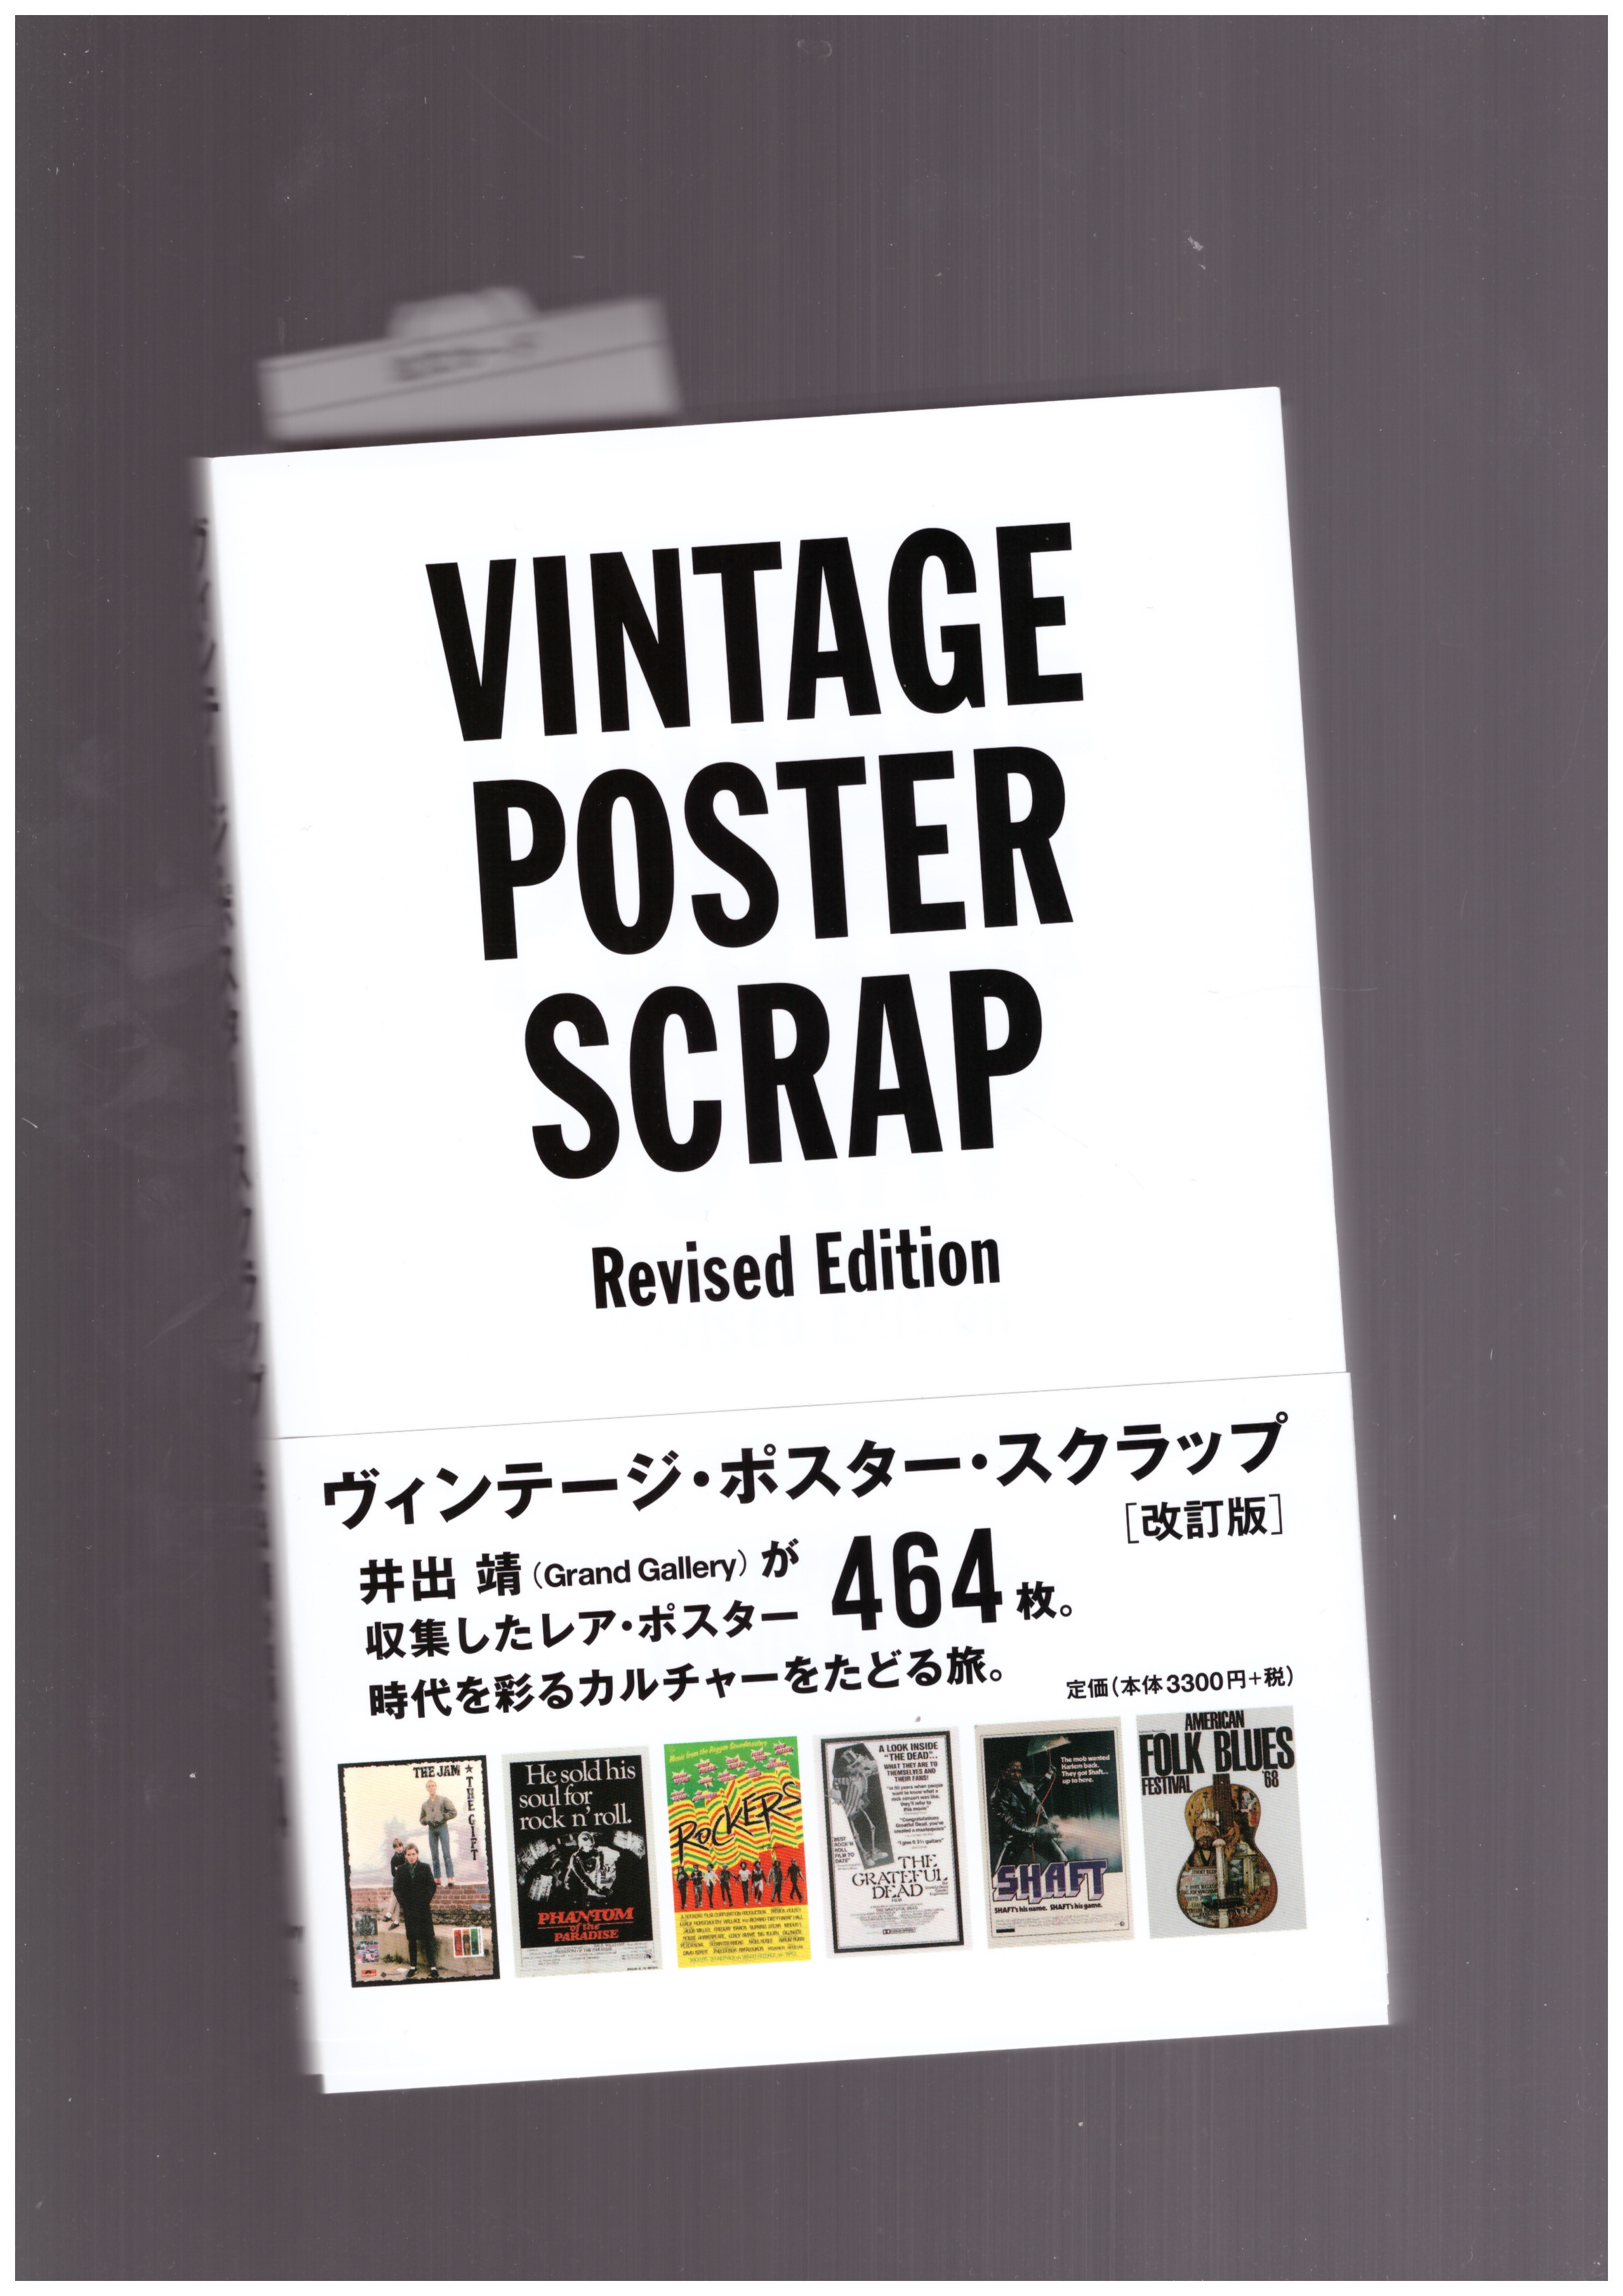 GRAND GALLERY (ed.) - Vintage poster scrap